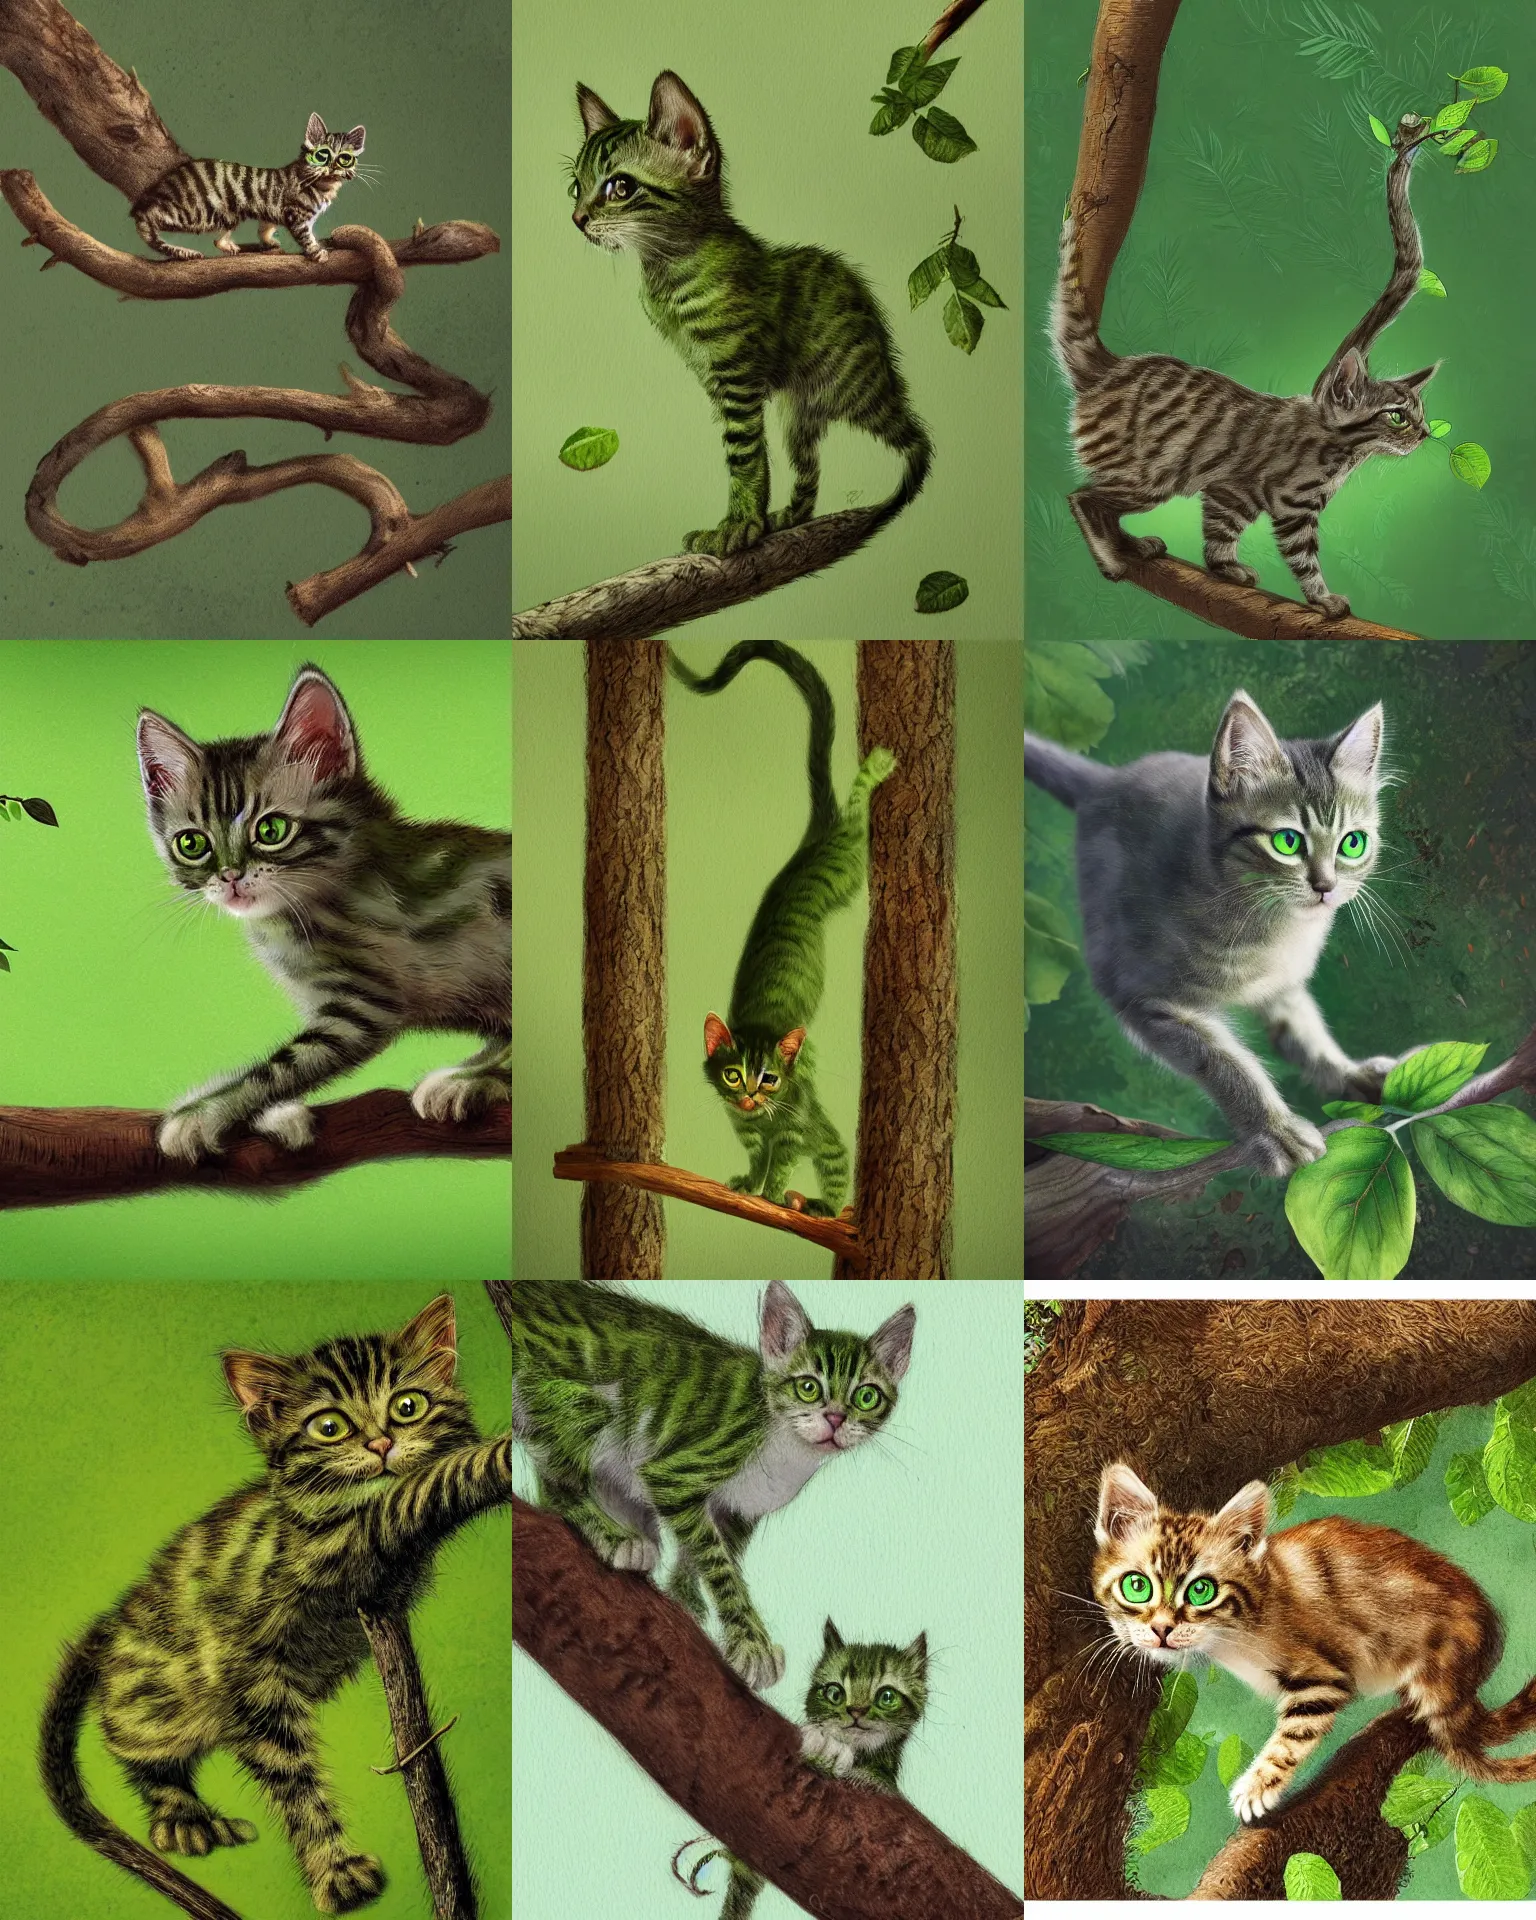 Prompt: green kitten walking on tree branch, leaf background, intricate, highly detailed, artstation, sharp focus, illustration, jurgens, rutkowski, simonetti